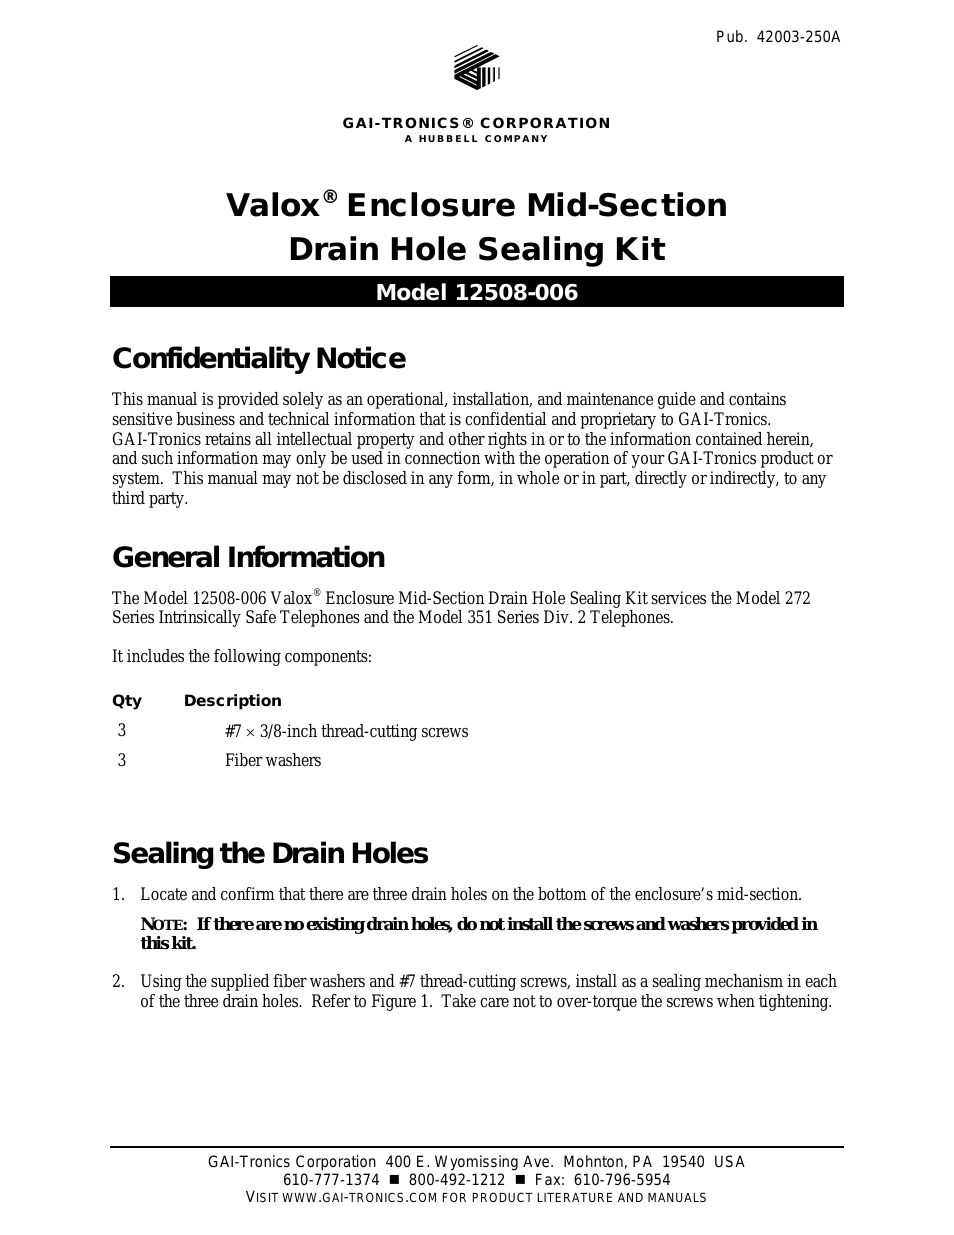 12508-006 Valox Enclosure Mid-Section Drain Hole Sealing Kit